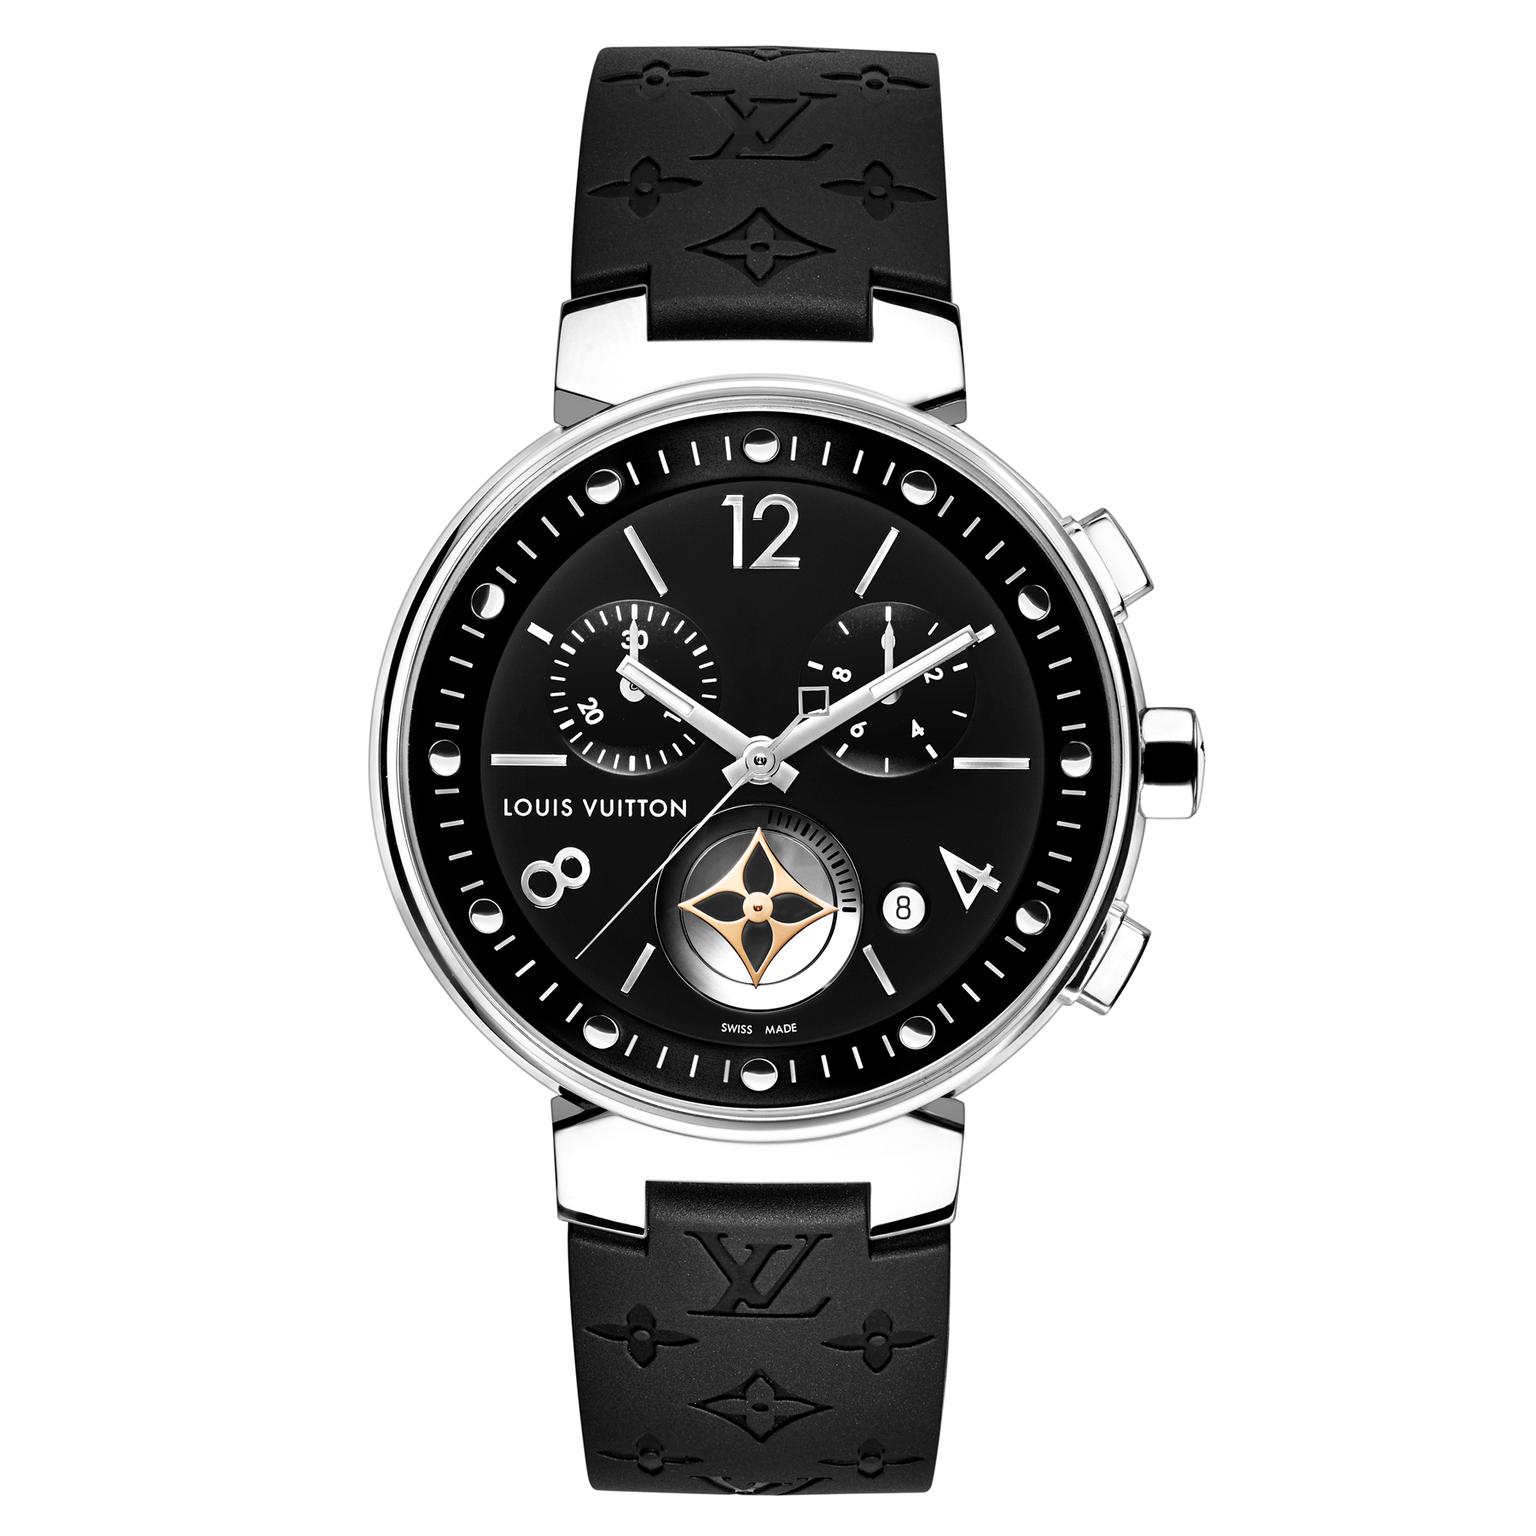 Louis Vuitton Tambour Moon Star Chronograph Black watch